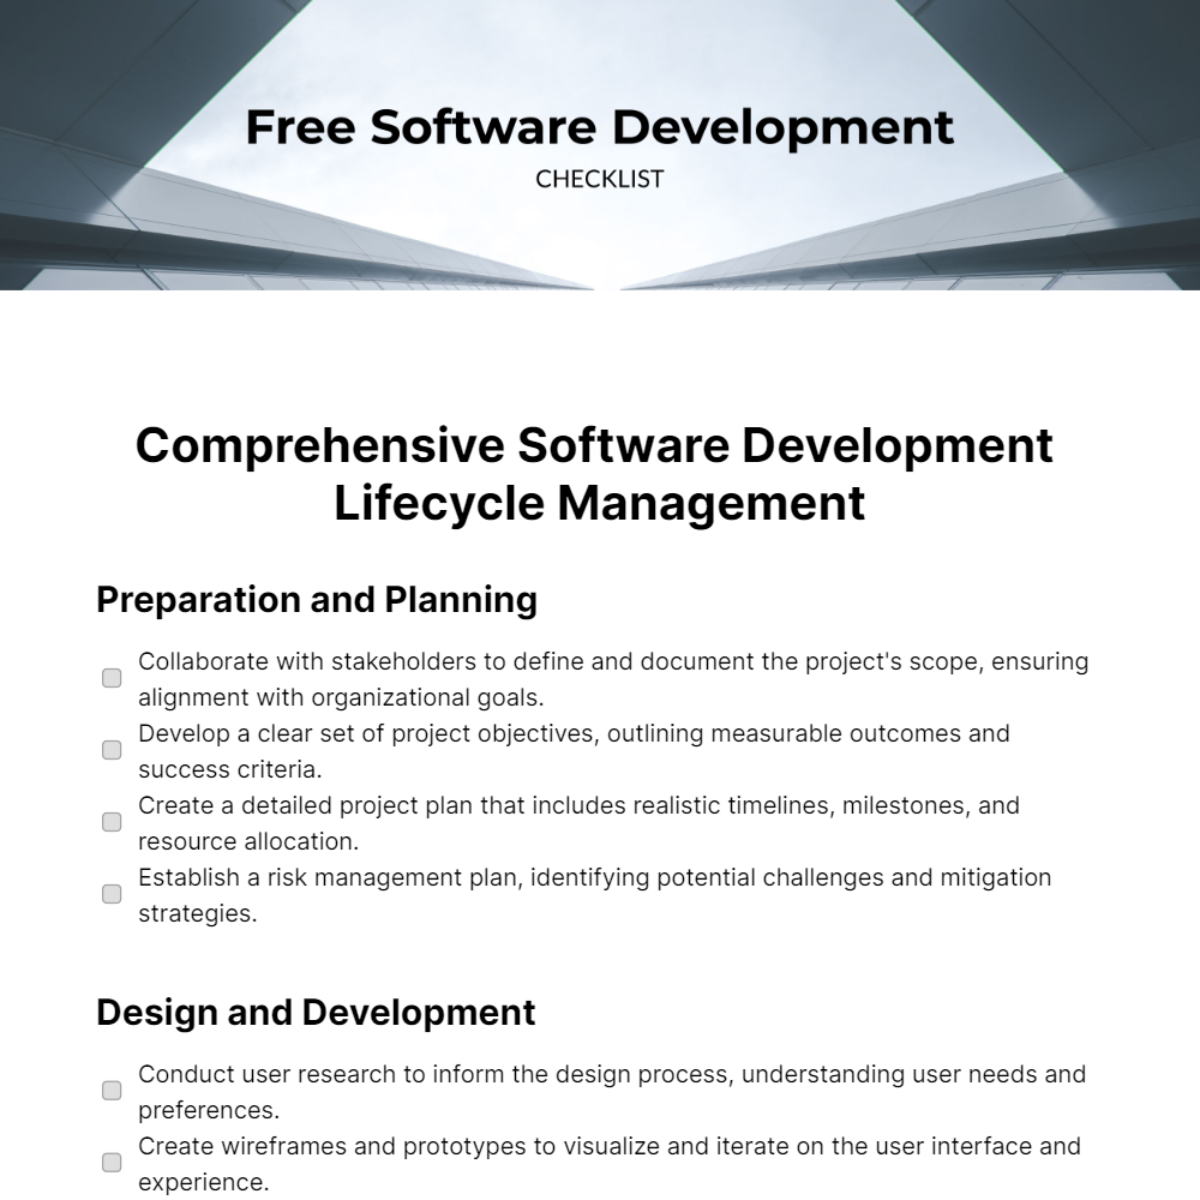 Free Software Development Checklist Template